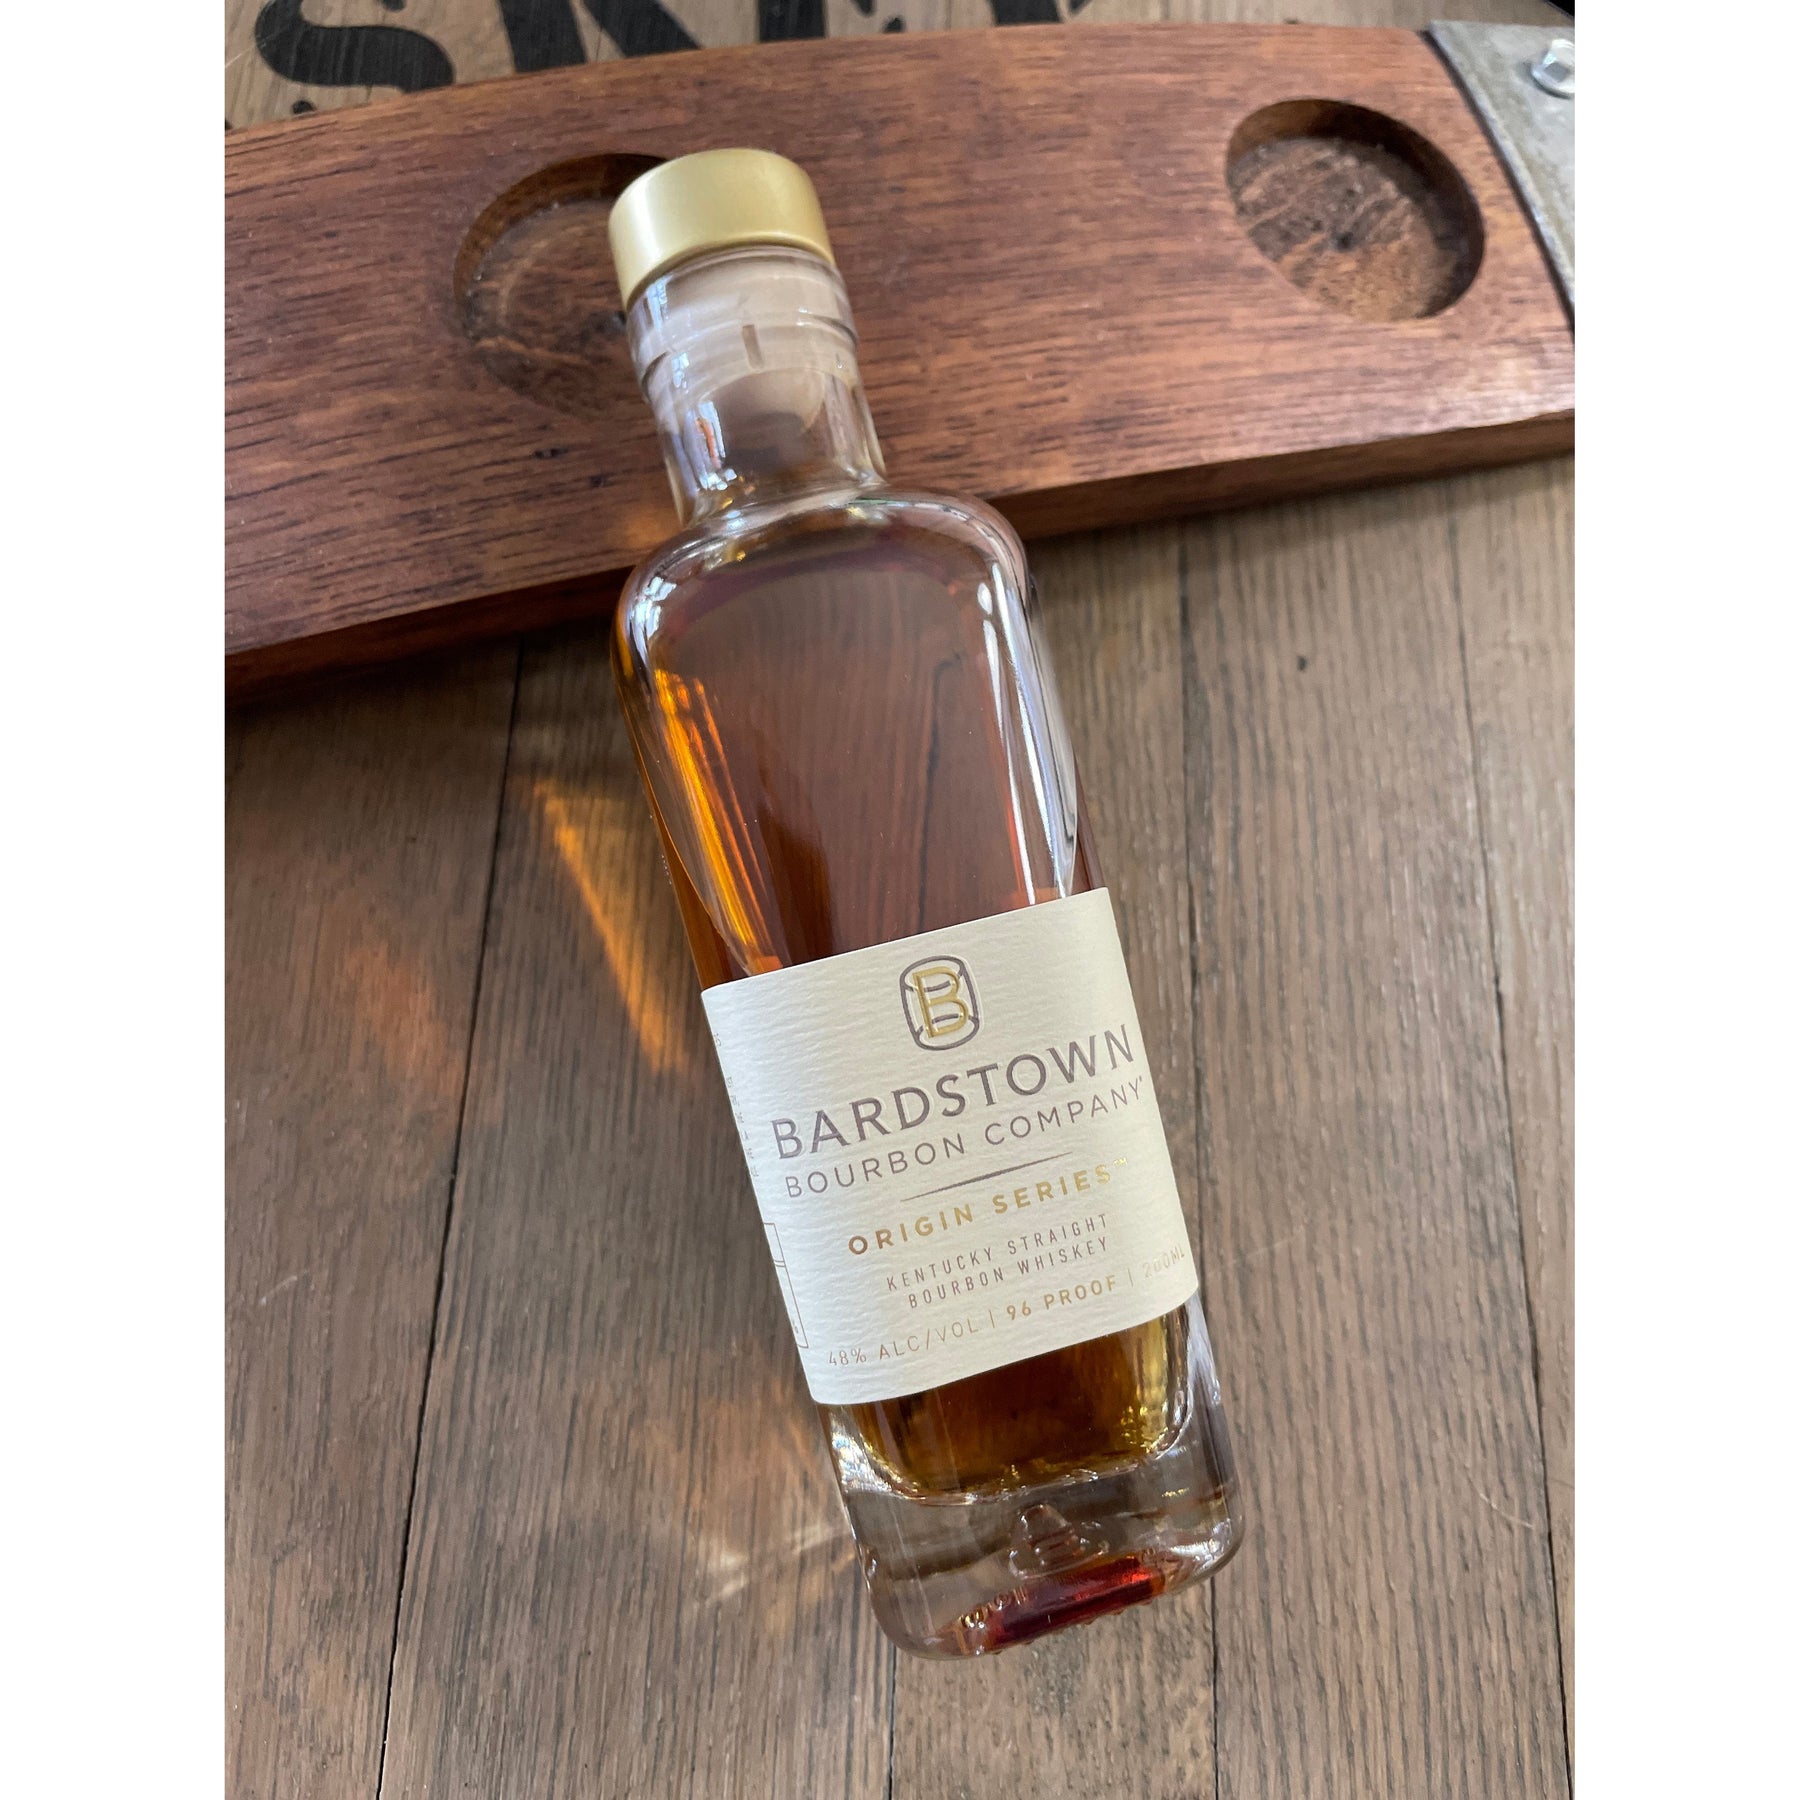 Bardstown Bourbon Co. Origin Series Kentucky Straight Bourbon Whiskey 750ml